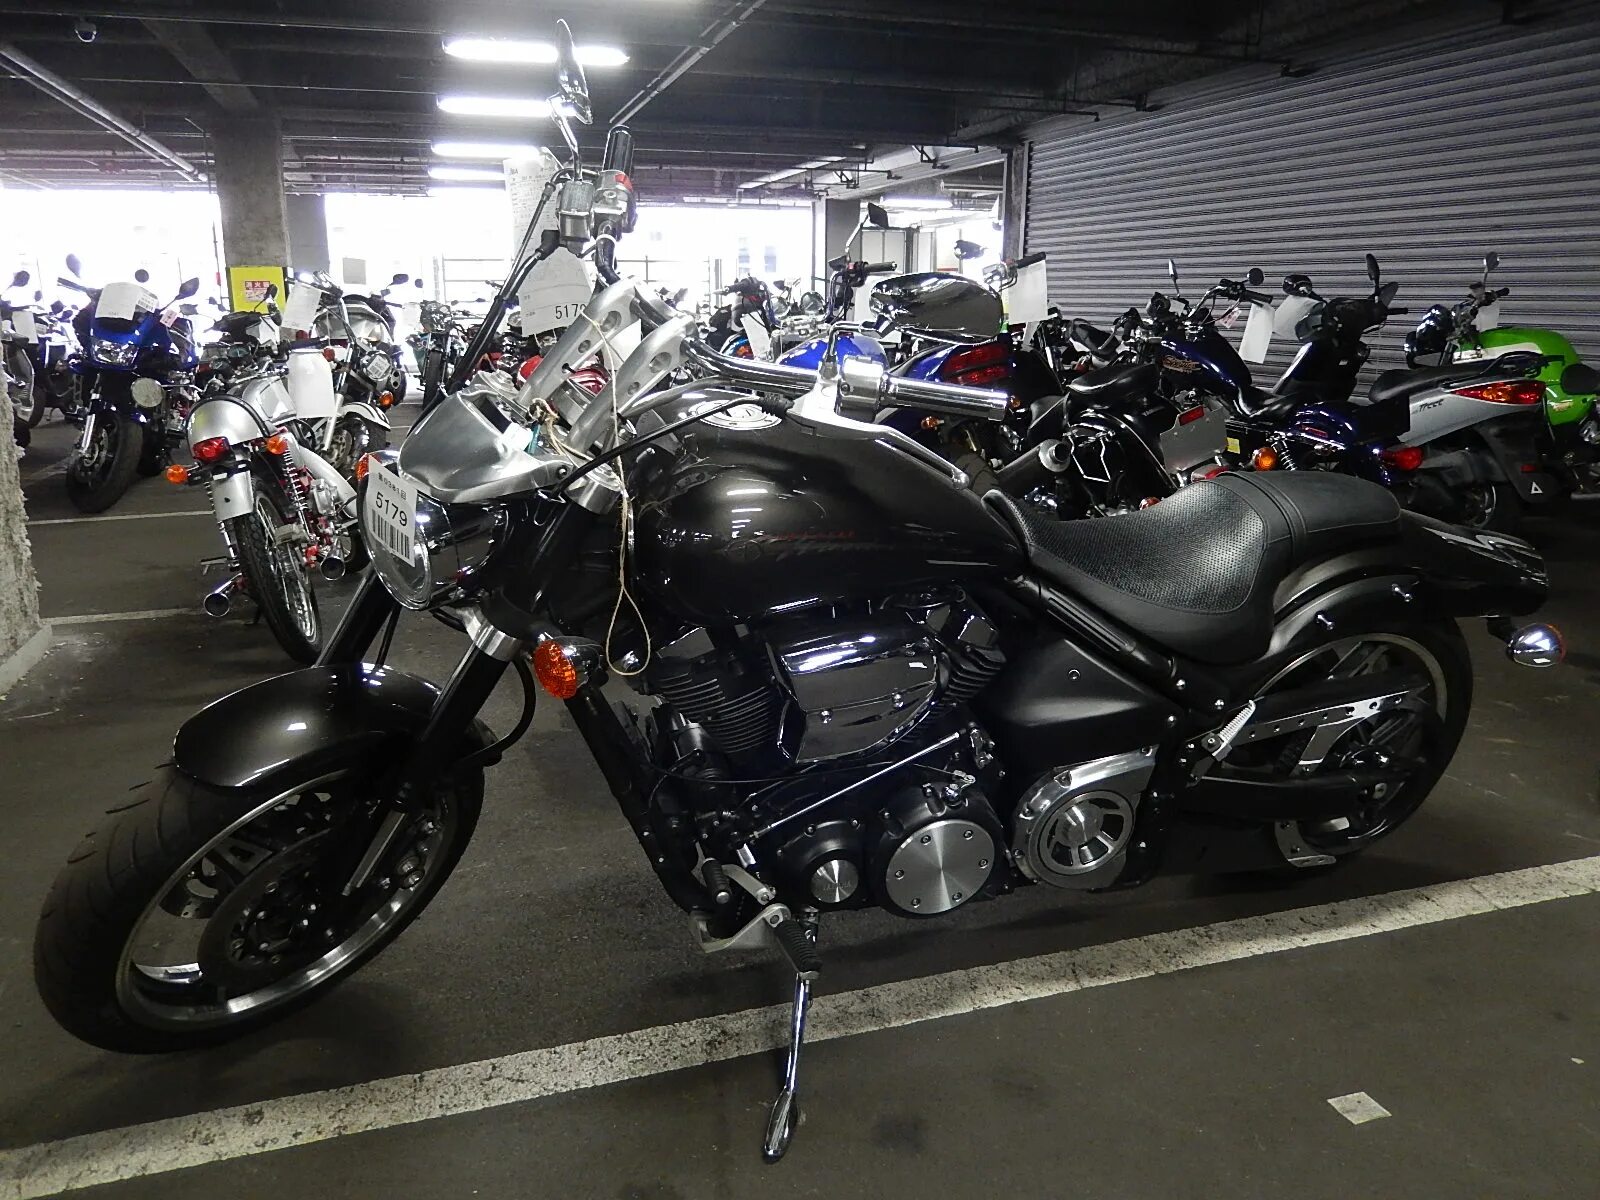 Купить мотоцикл из японии во владивостоке. Ямаха XV 1700 2004. Ямаха Икс 11. Мотоциклы и мототехника. Аукцион мотоциклов.